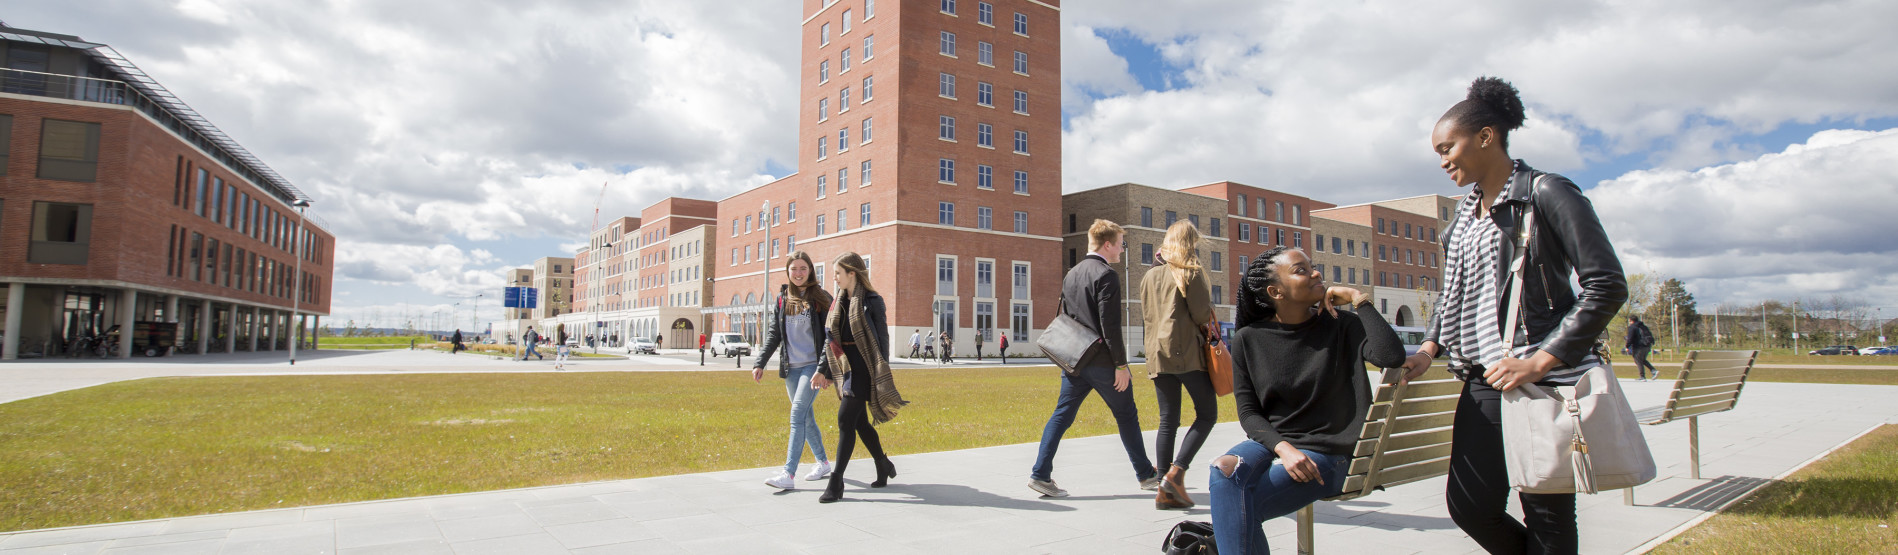 Students walking through Bay campus